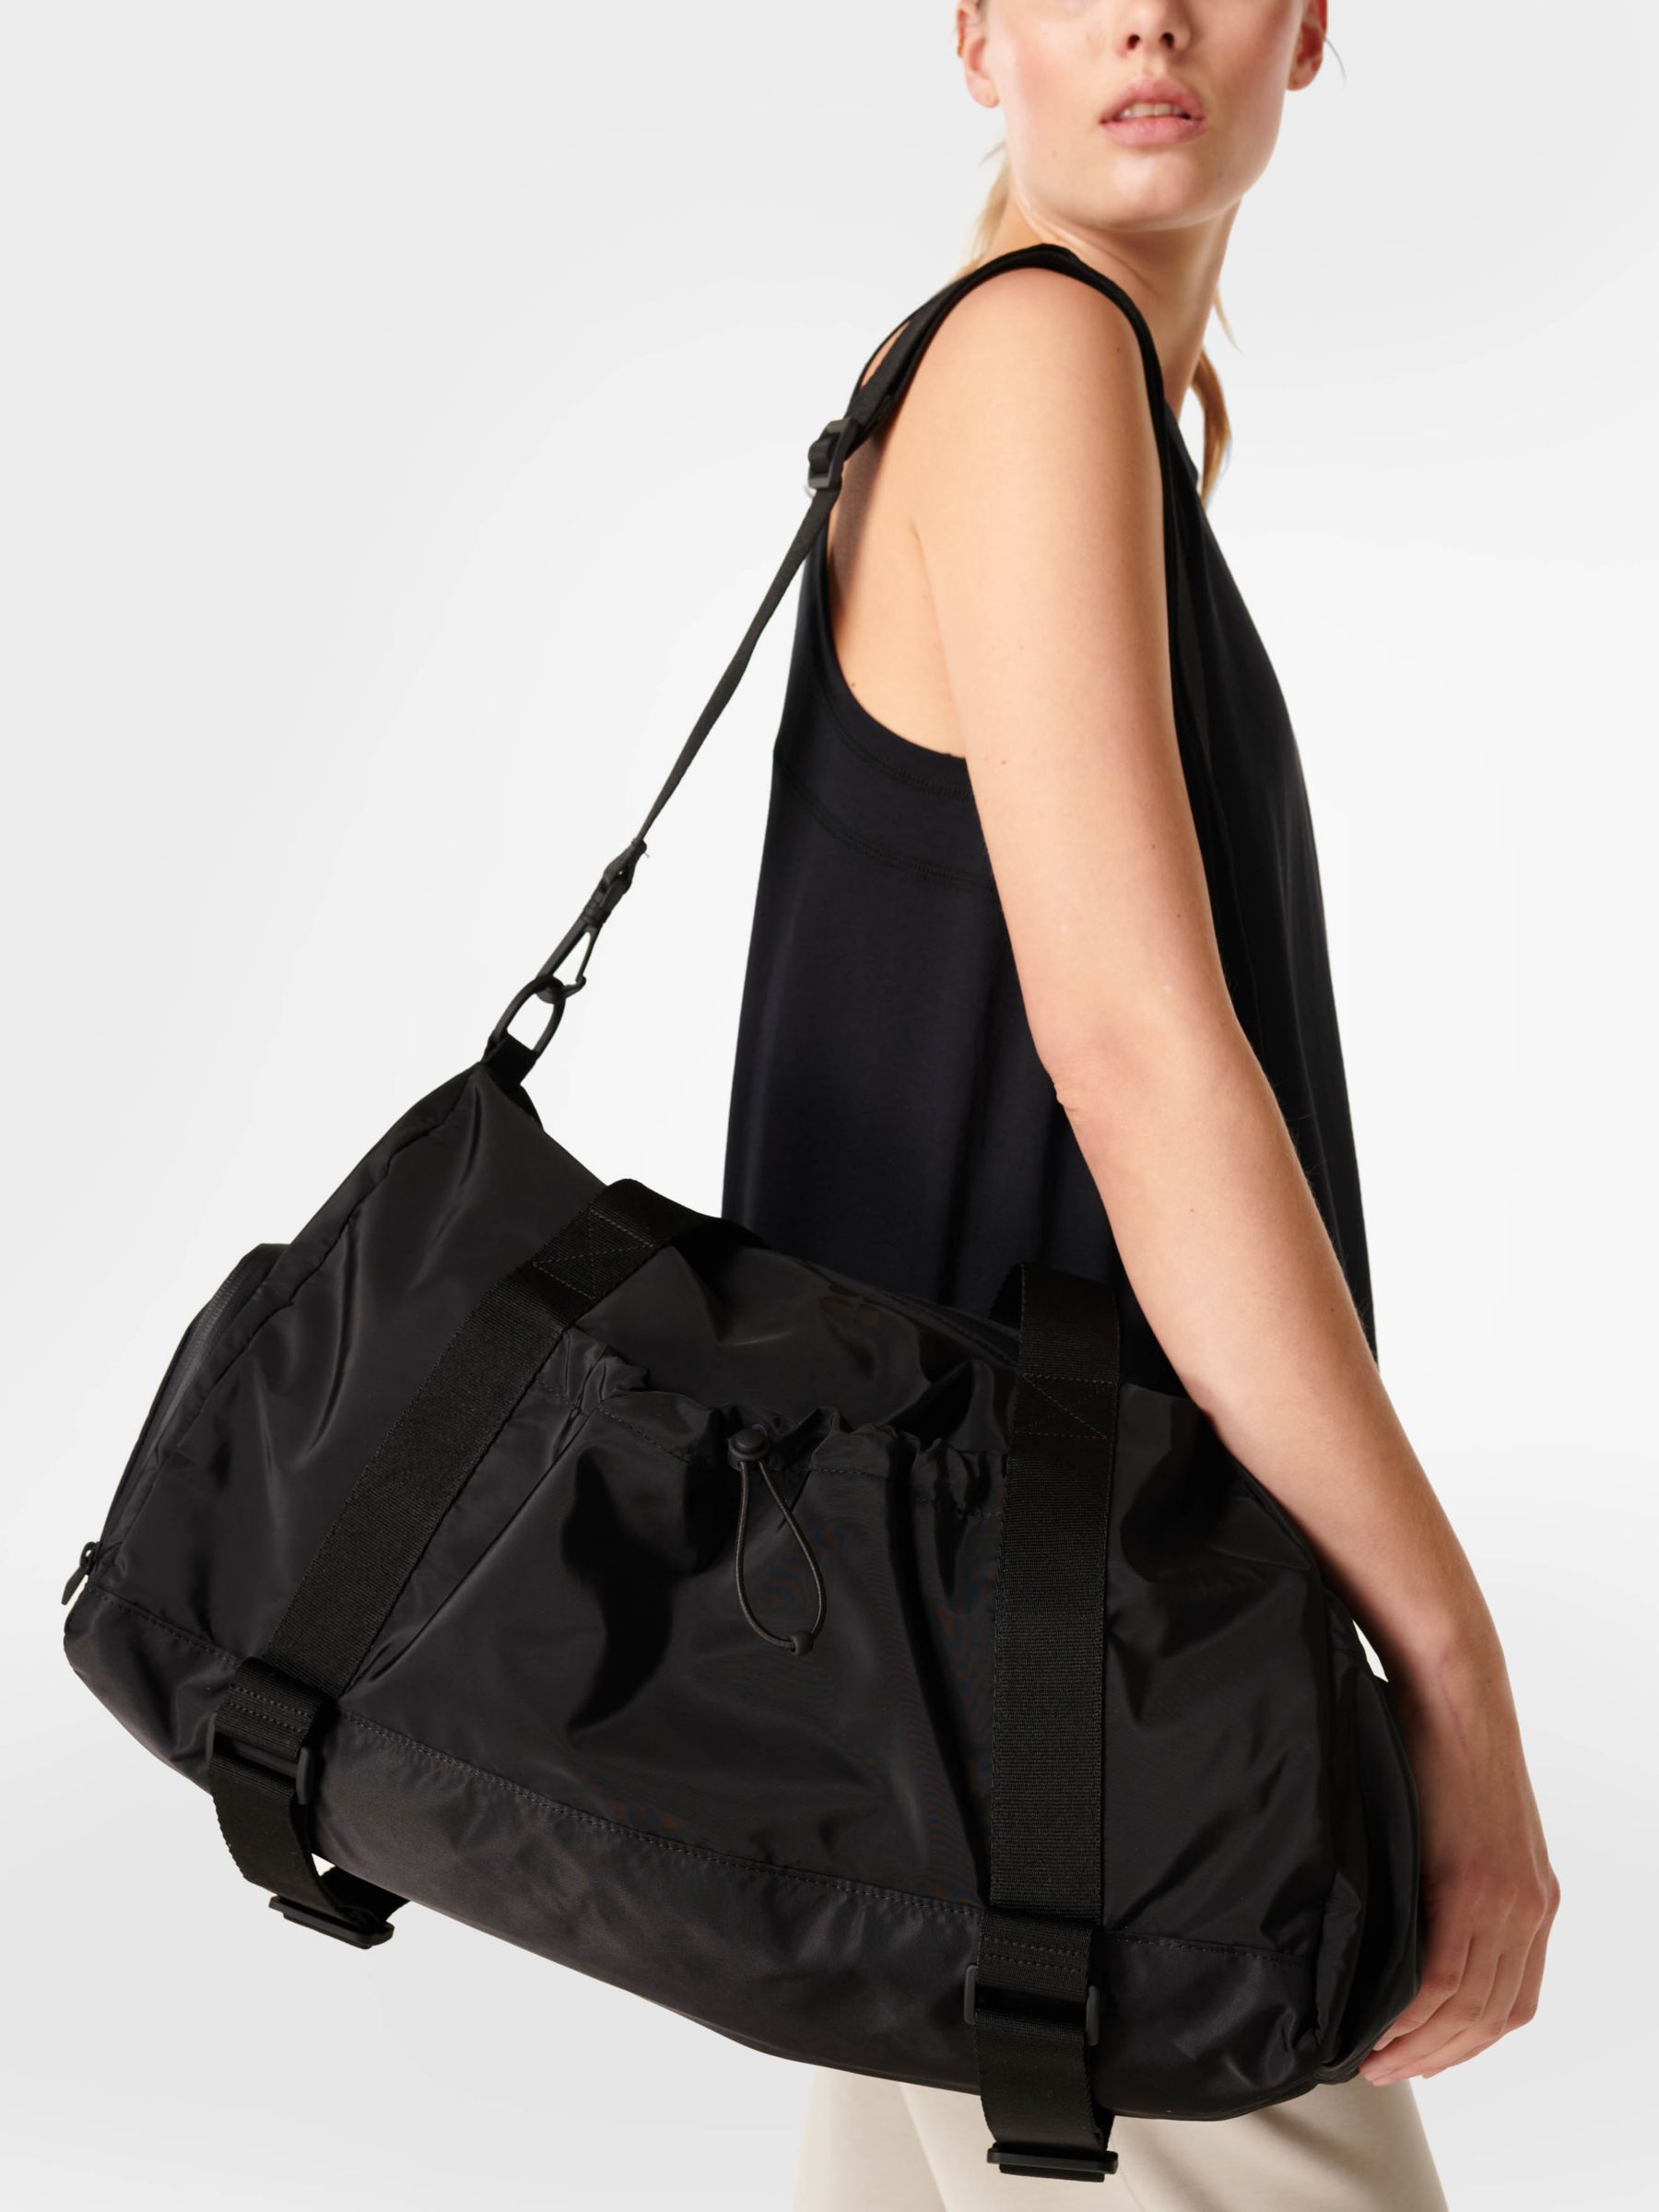 Sweaty Betty womens Icon Workout bag, Black, One Size US, Black